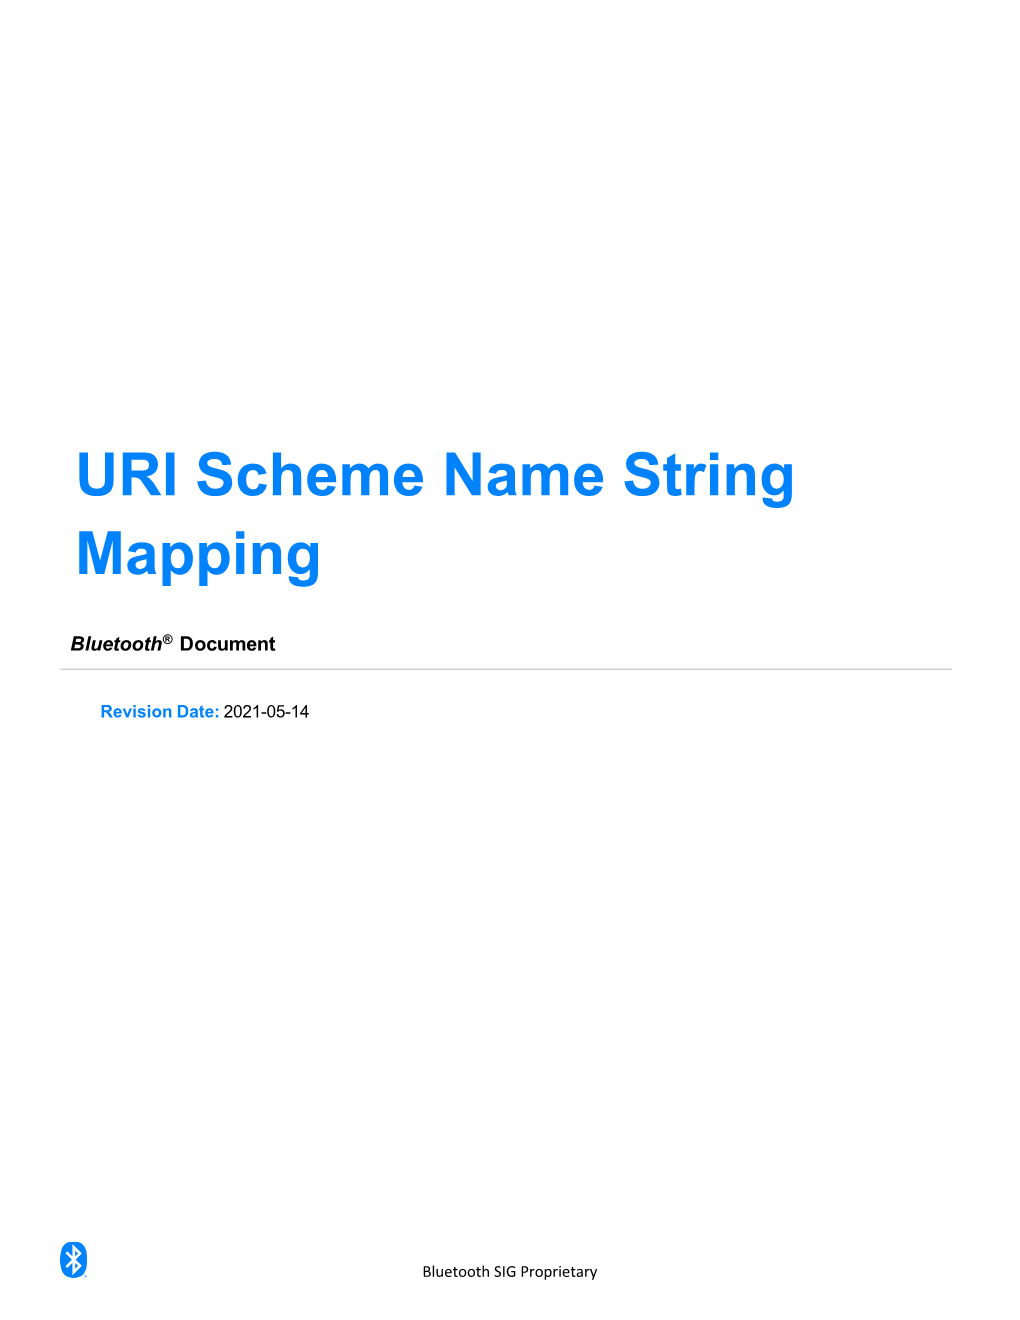 URI Scheme Name String Mapping